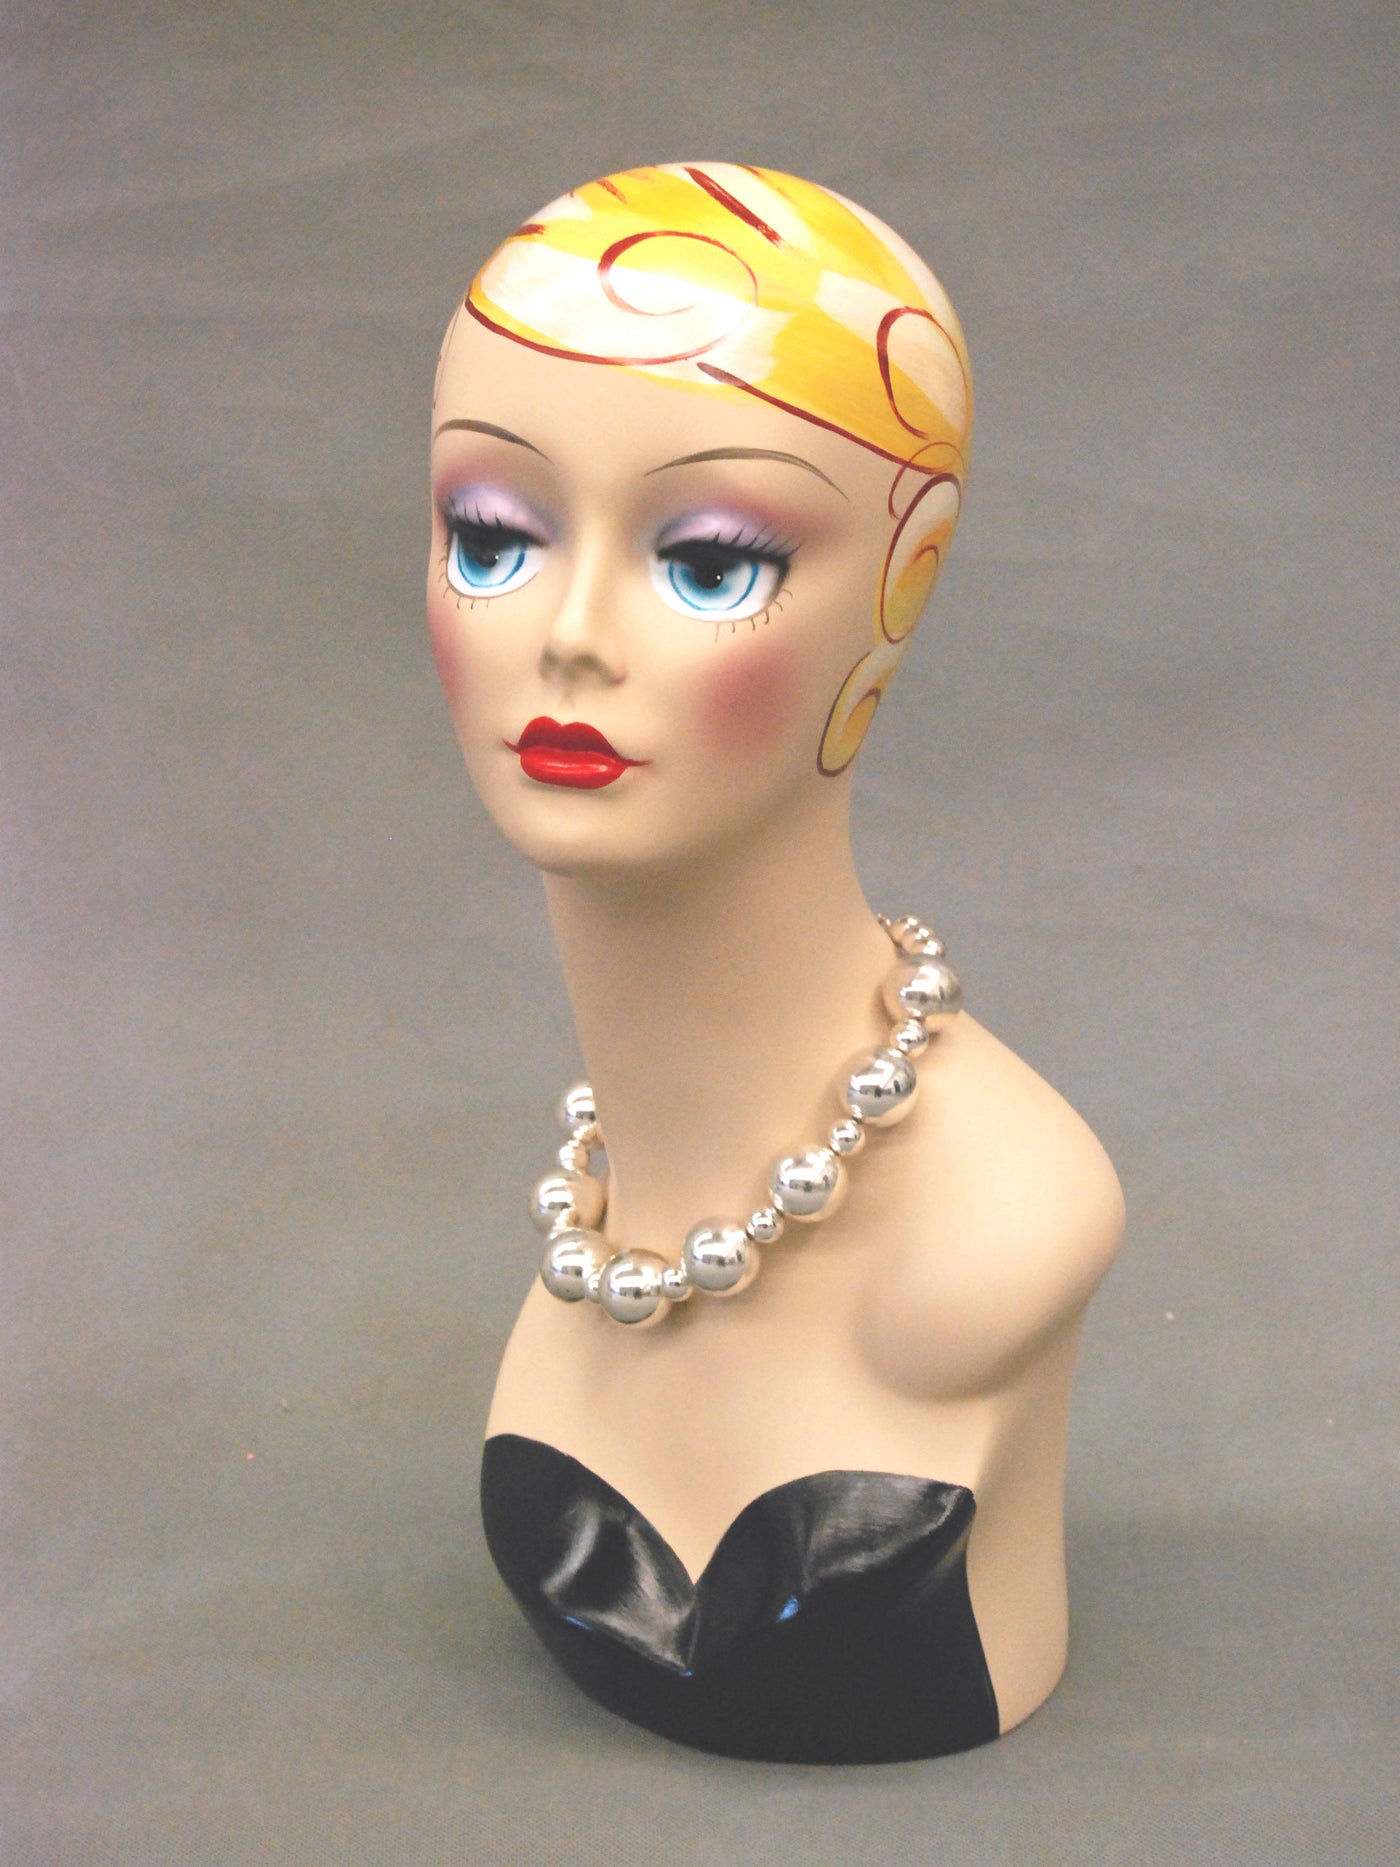 Vintage-style Female Mannequin Head: Veronica 2